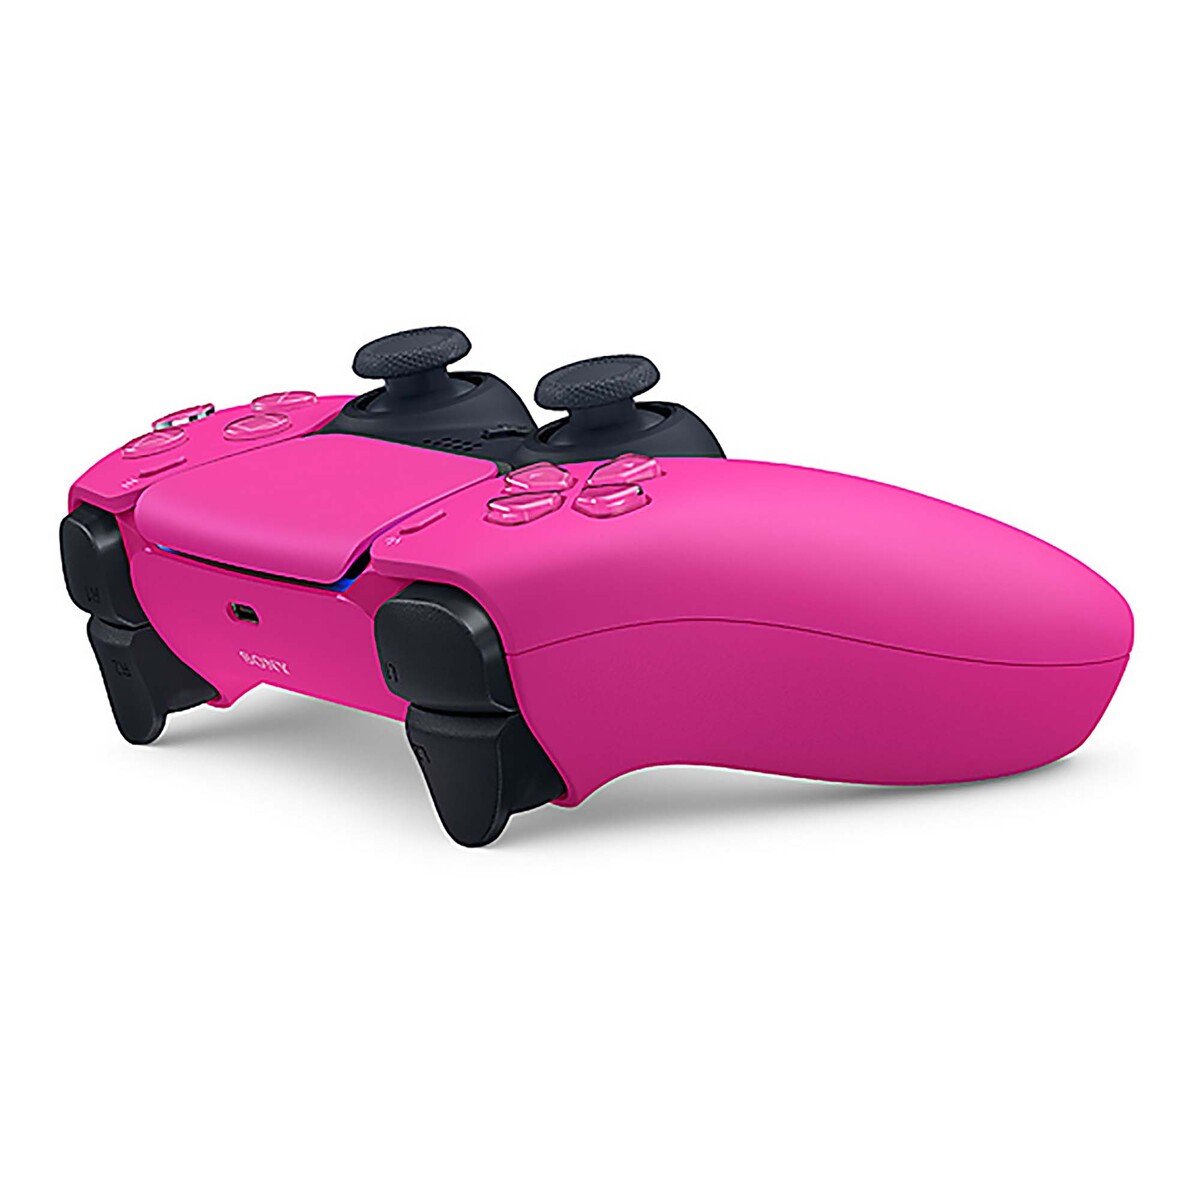 Sony PlayStation 5 DualSense Wireless Controller - Nova Pink Colour